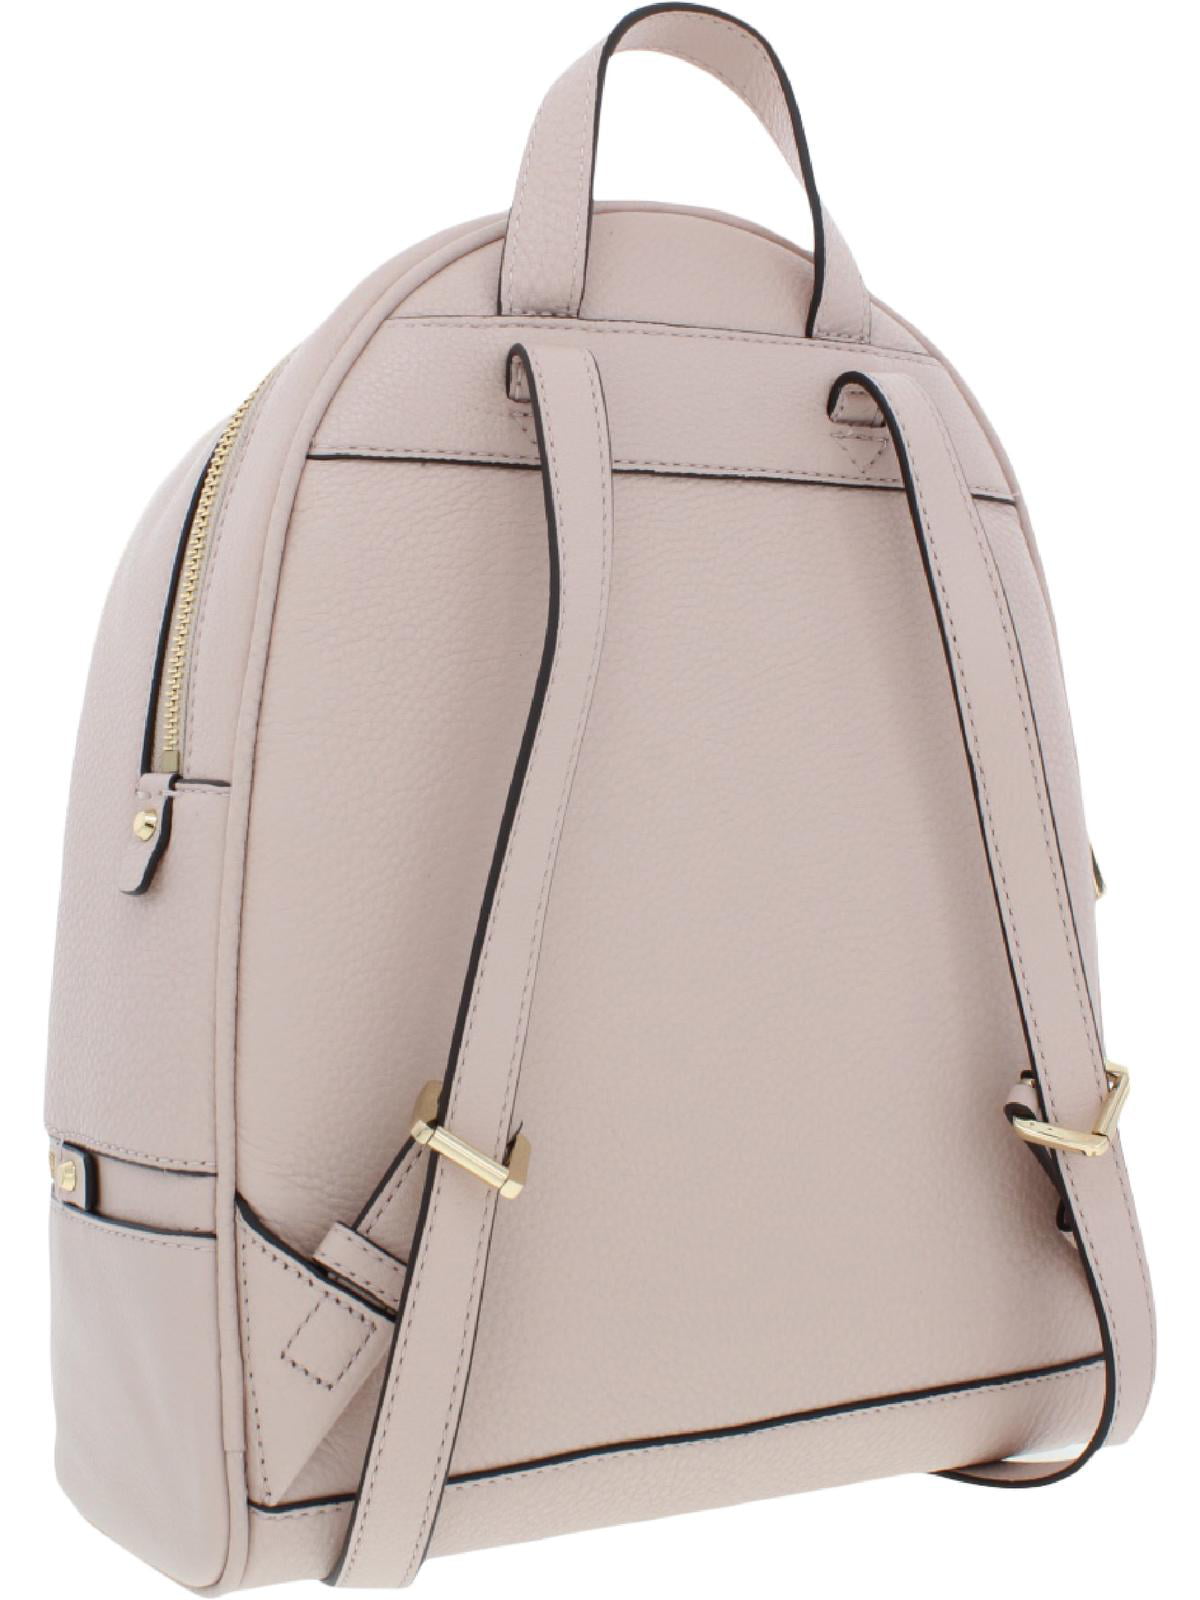 Michael Kors Rhea Zip Medium Pebble Soft Pink Leather Backpack